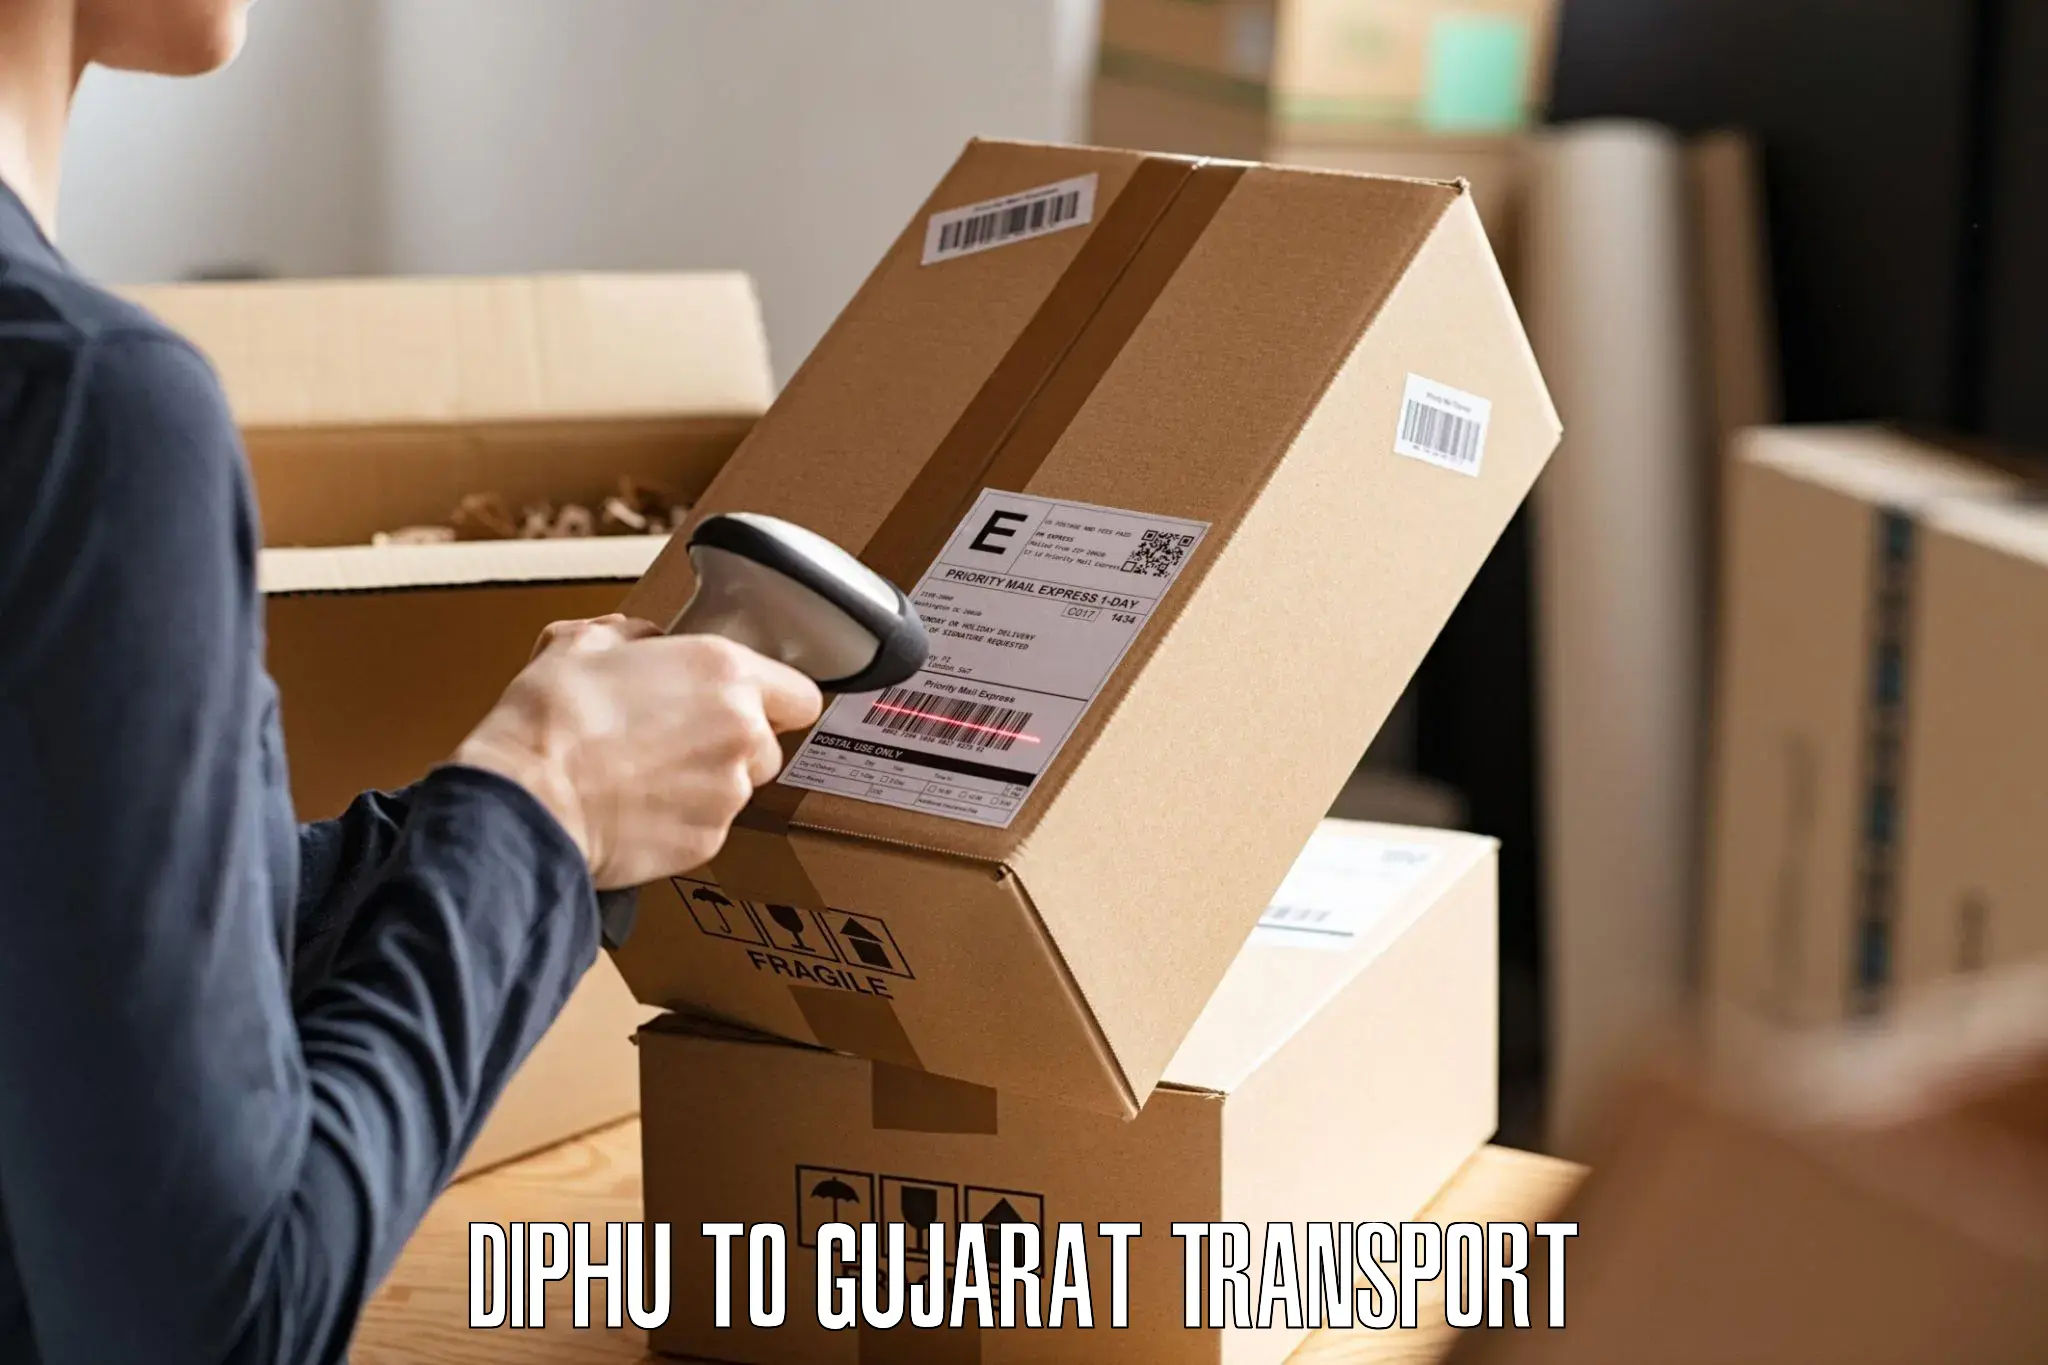 Delivery service Diphu to Chotila